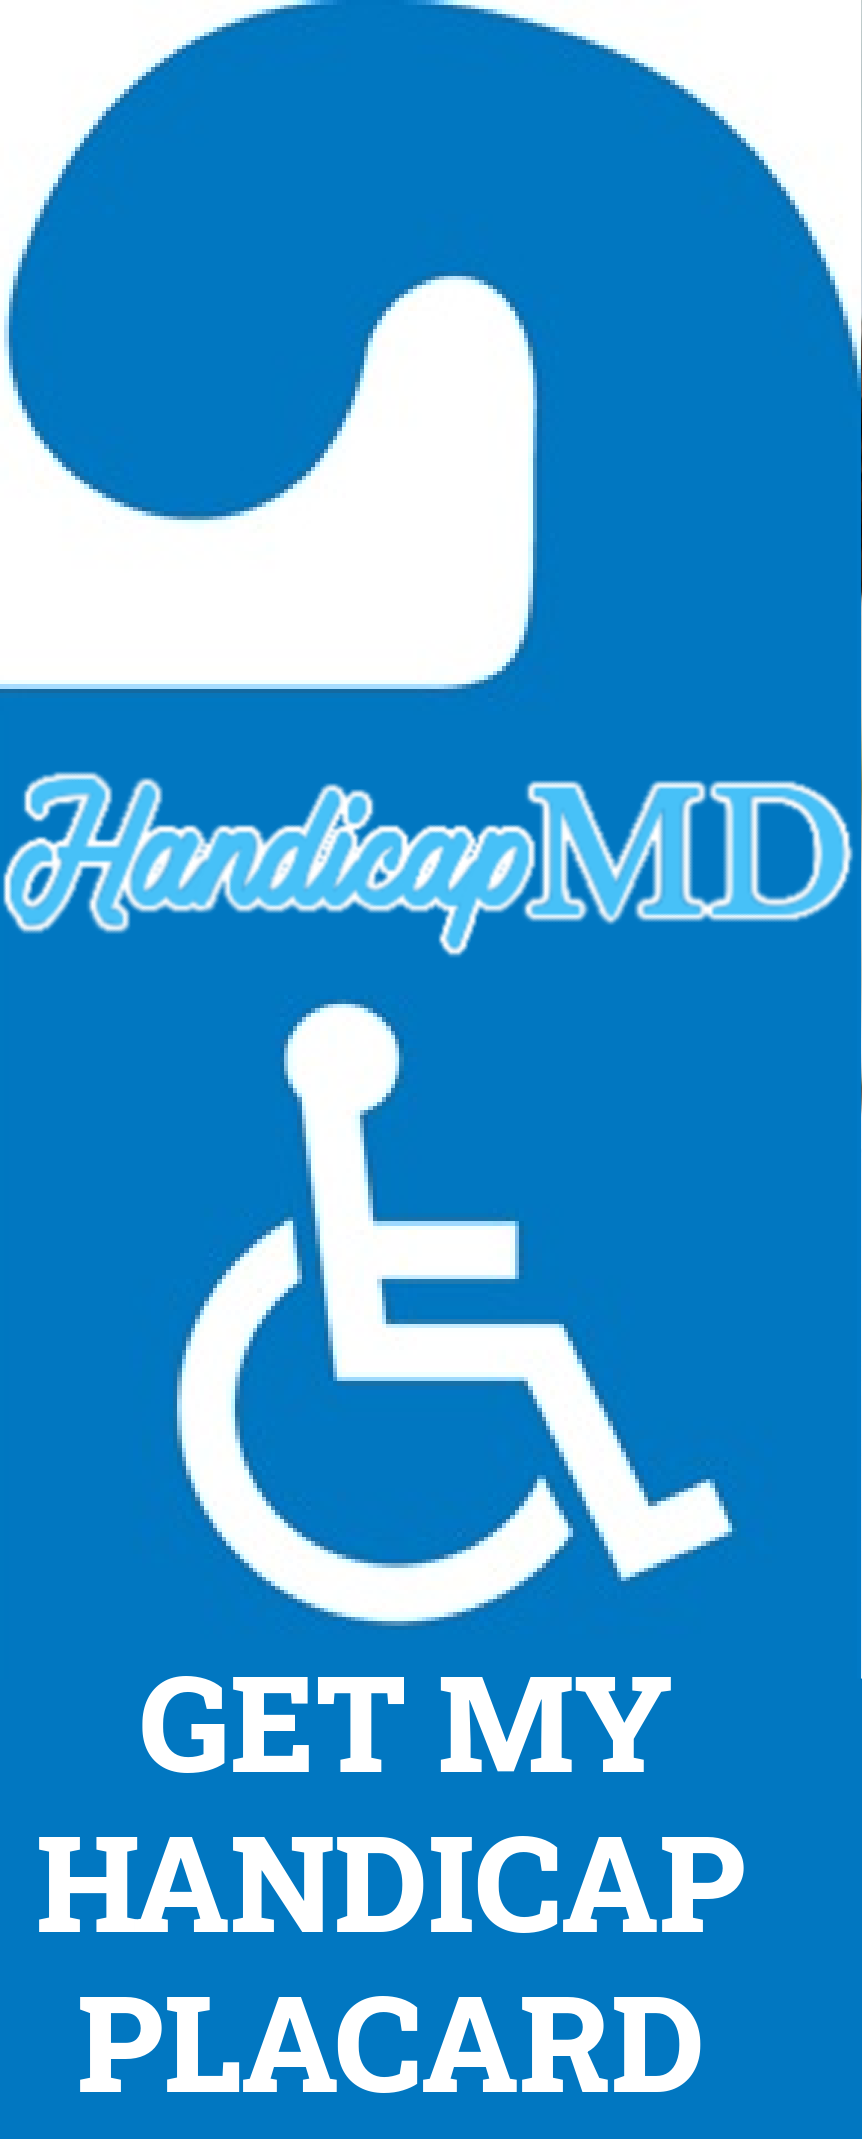 Delaware Handicap Parking Placards